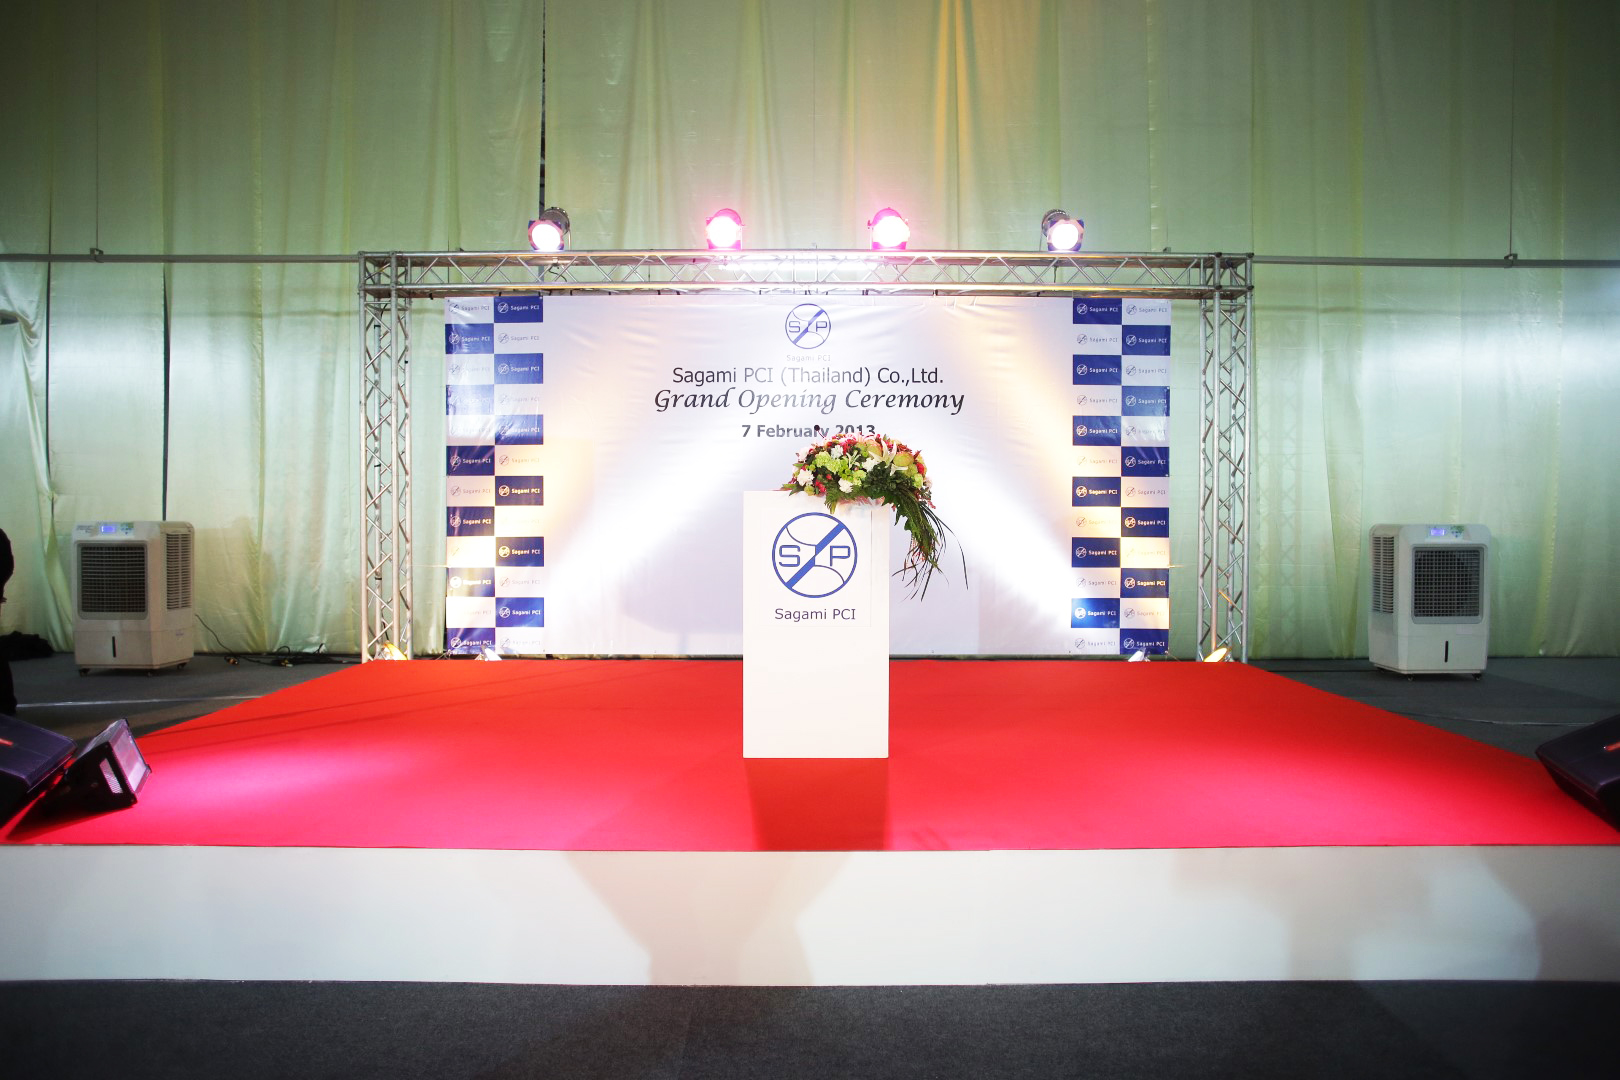 Opening Ceremony : Sagami PCI